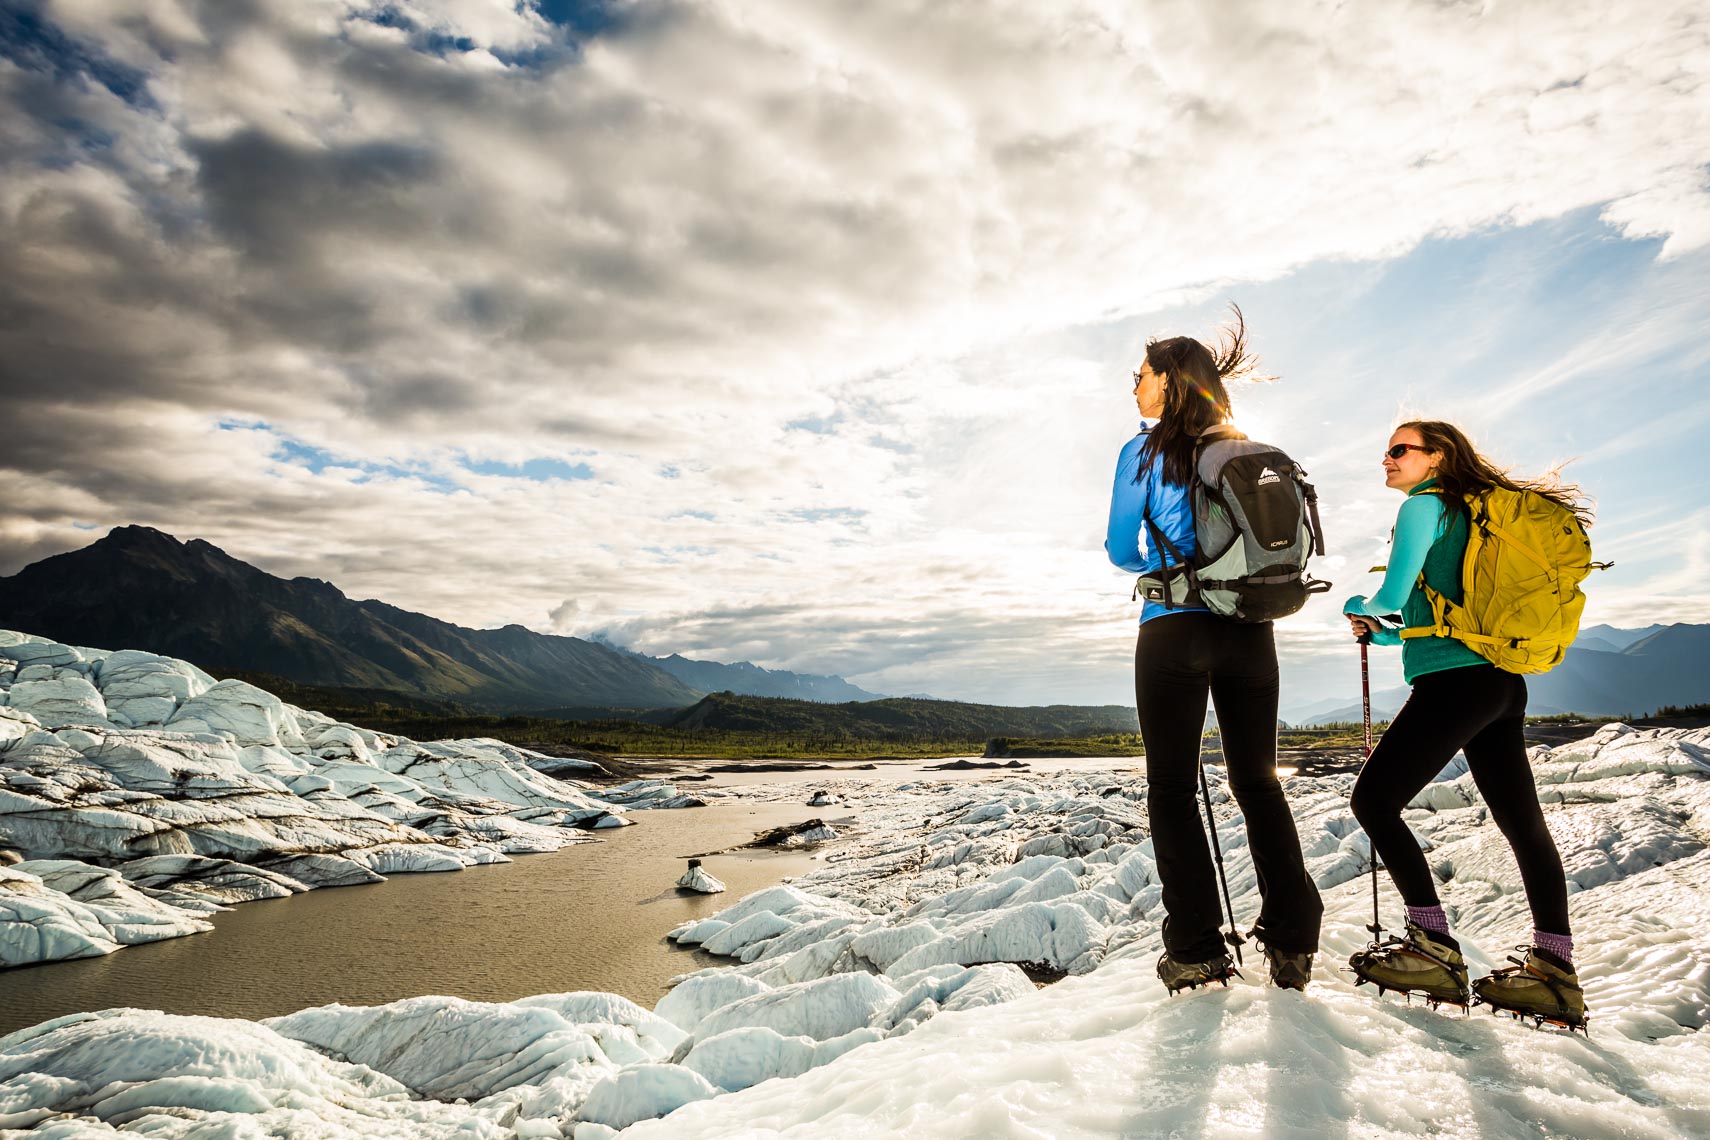 Alaska Matanuska Glacier Trekking | Photographer Michael DeYoung